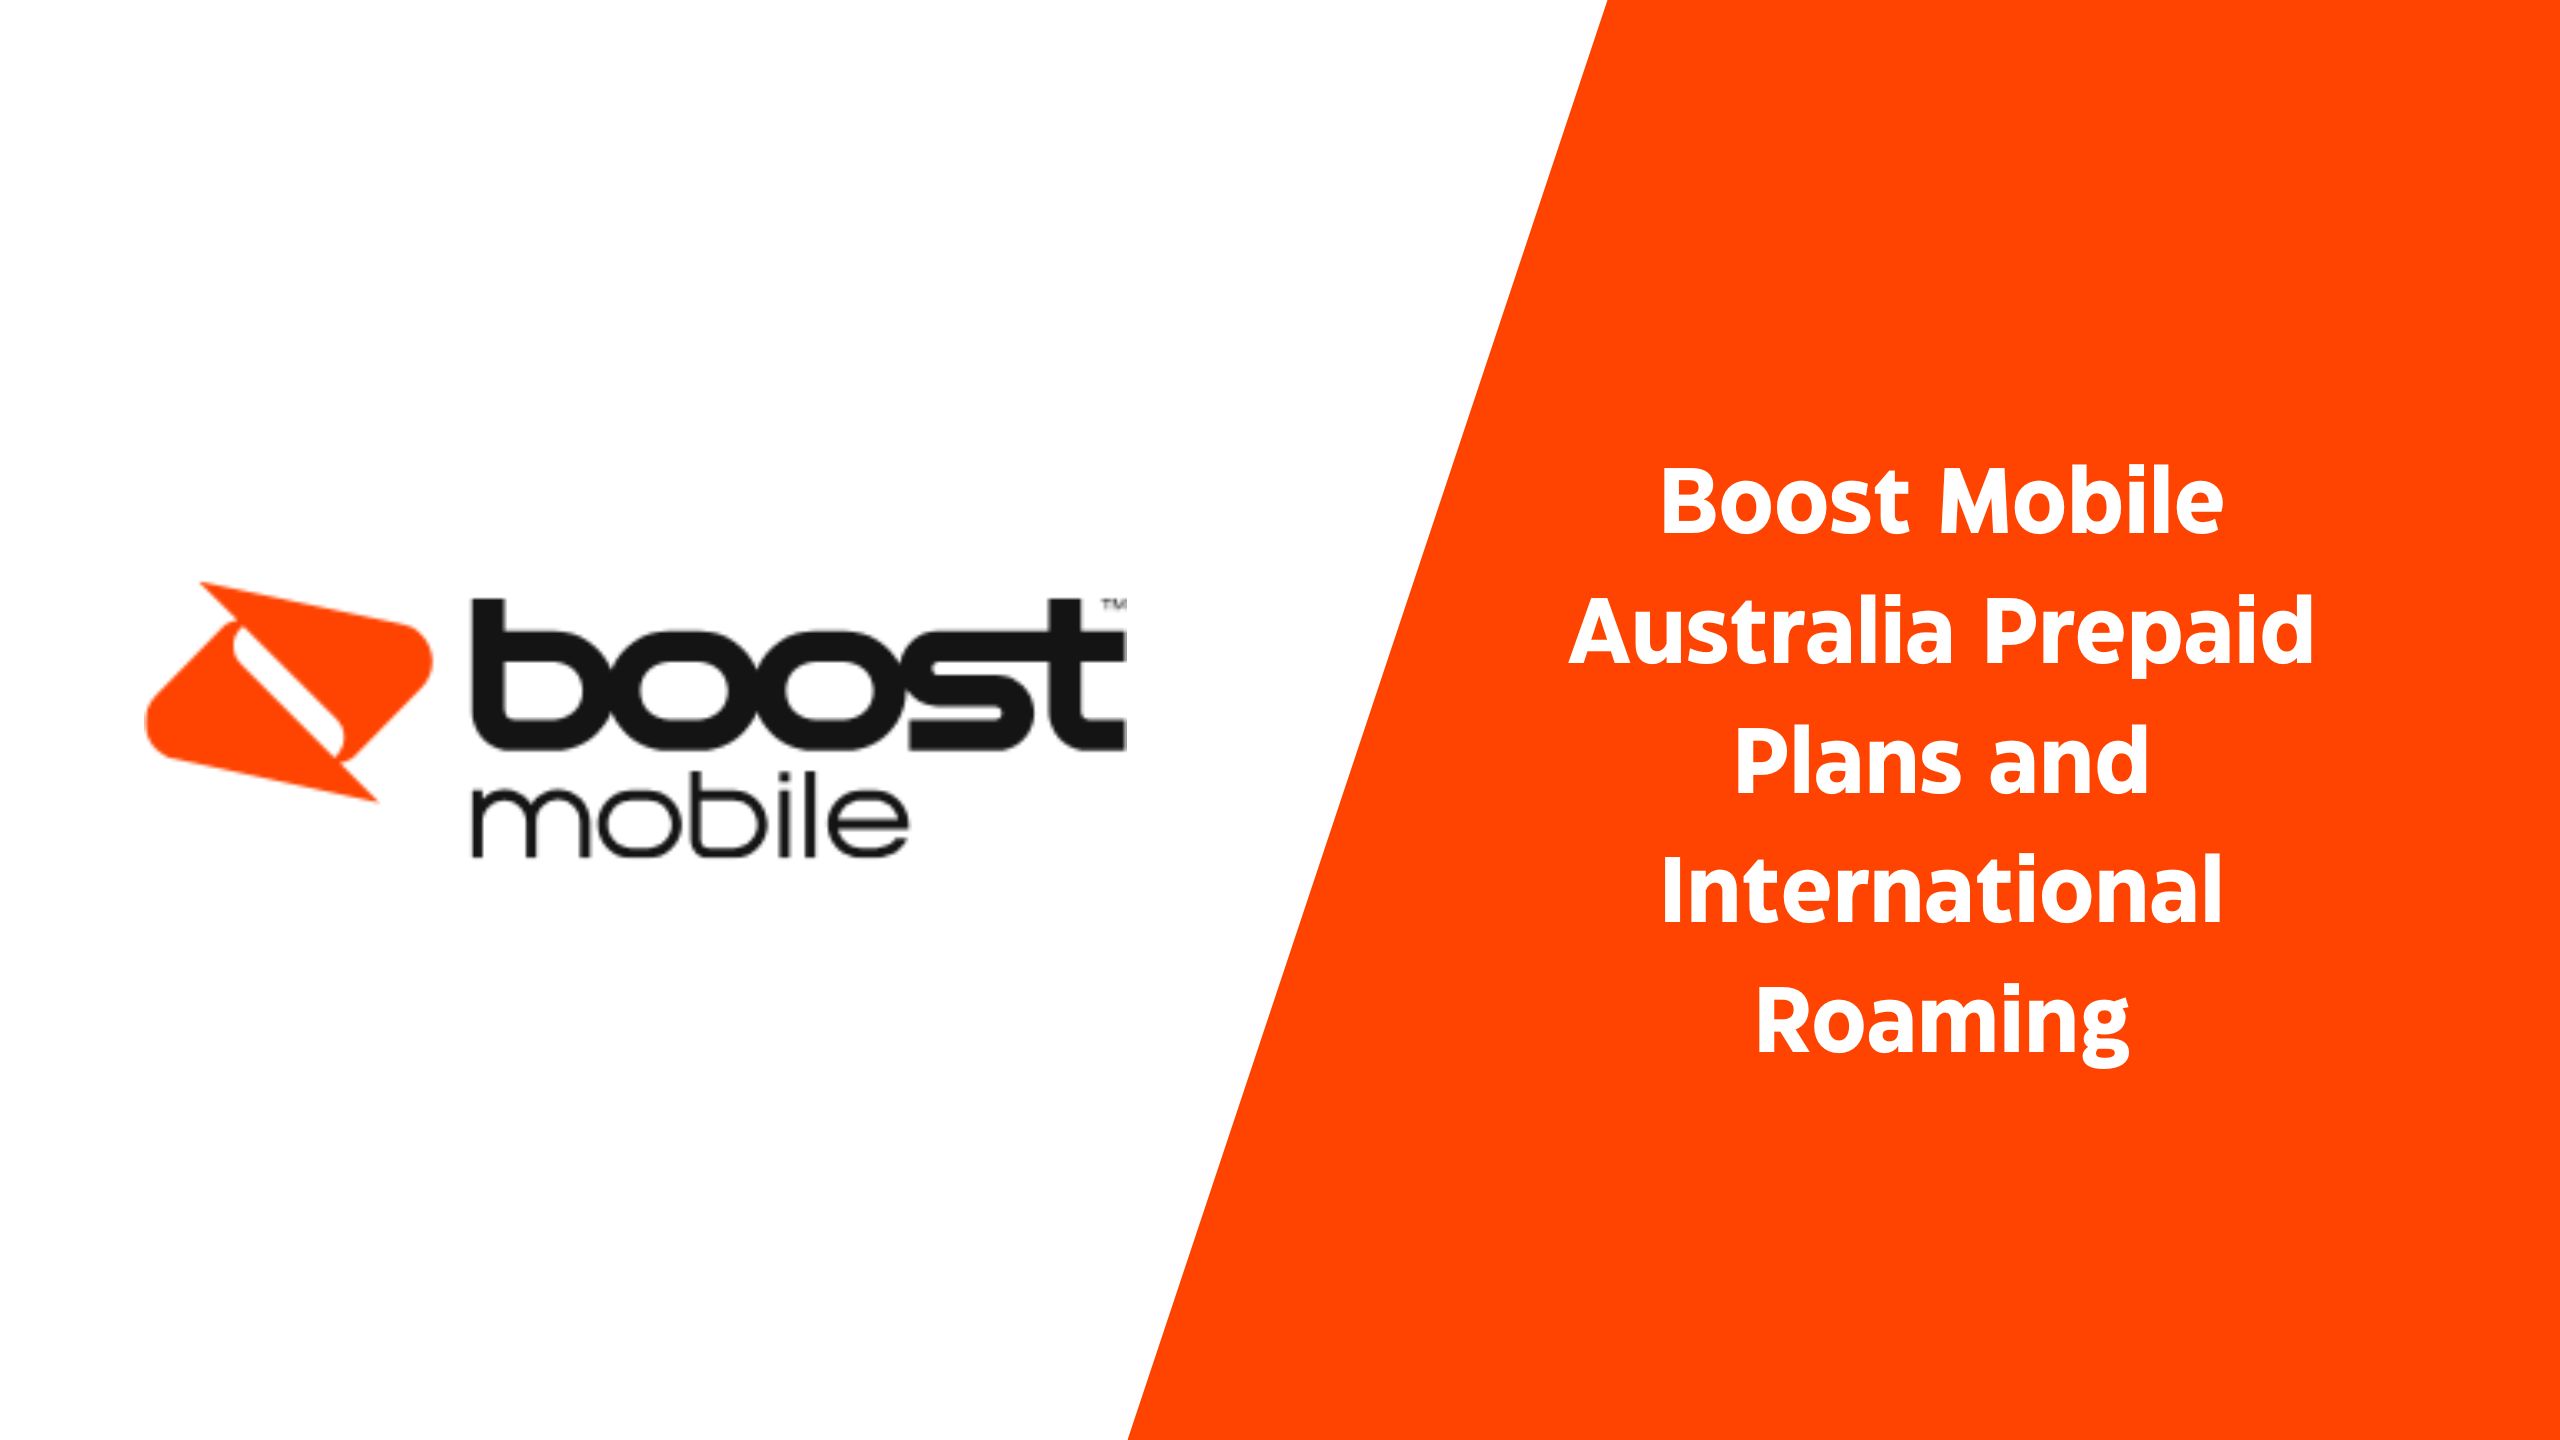 Boost Mobile Australia Prepaid Plans and International Roaming